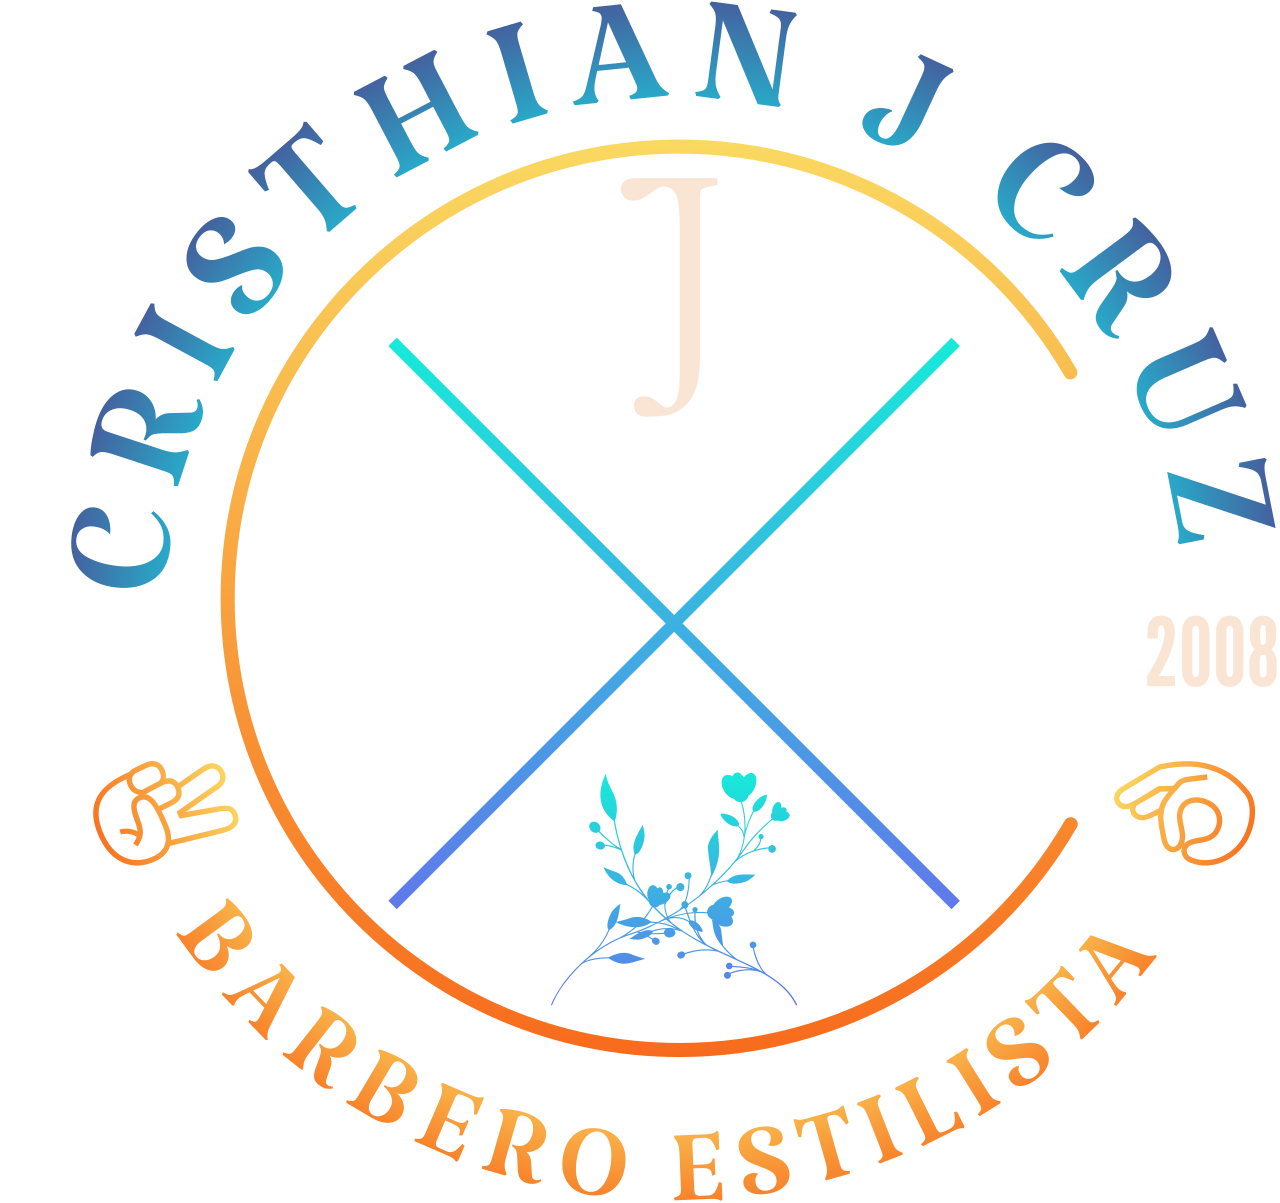 CRISTHIAN J CRUZ 's logo